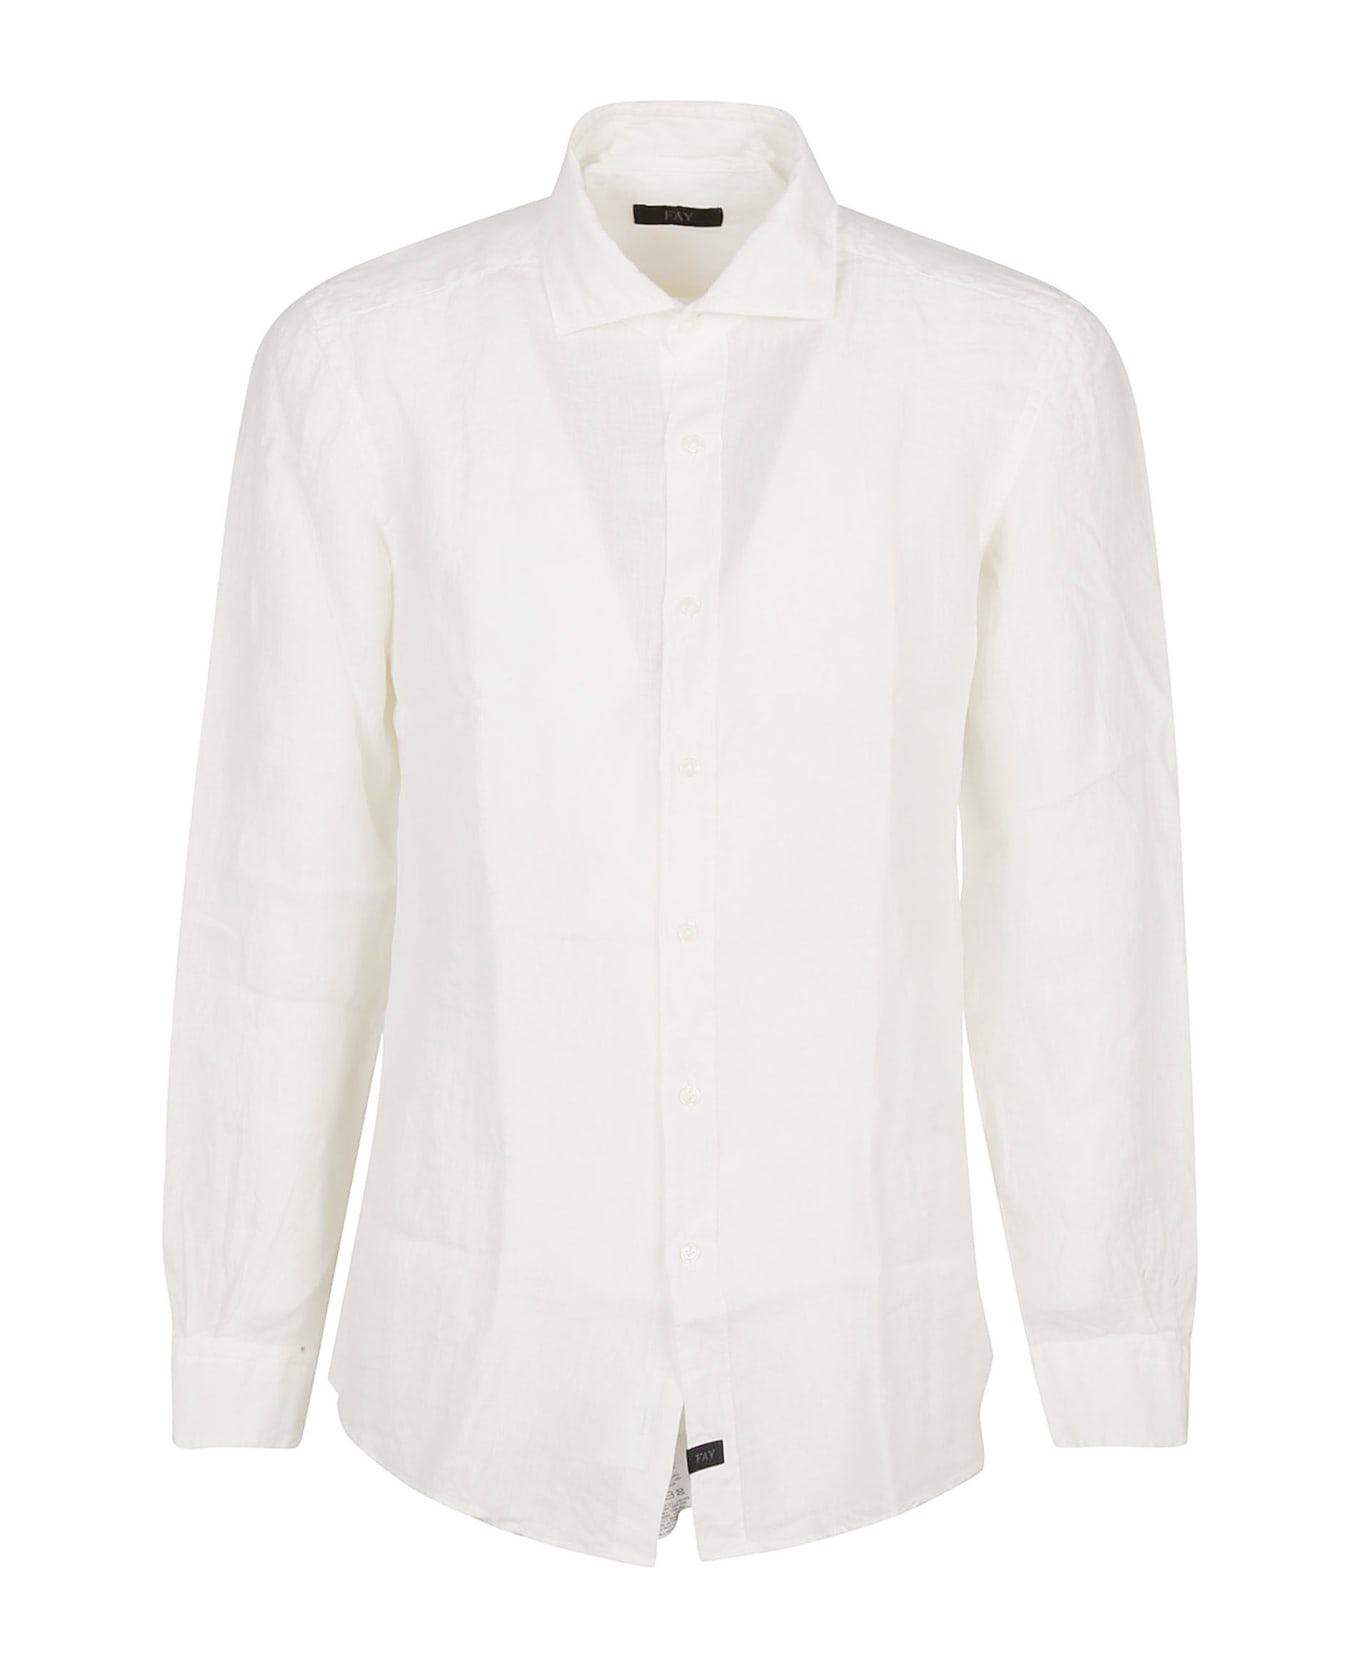 Fay Long Sleeve Shirt - Bianco シャツ